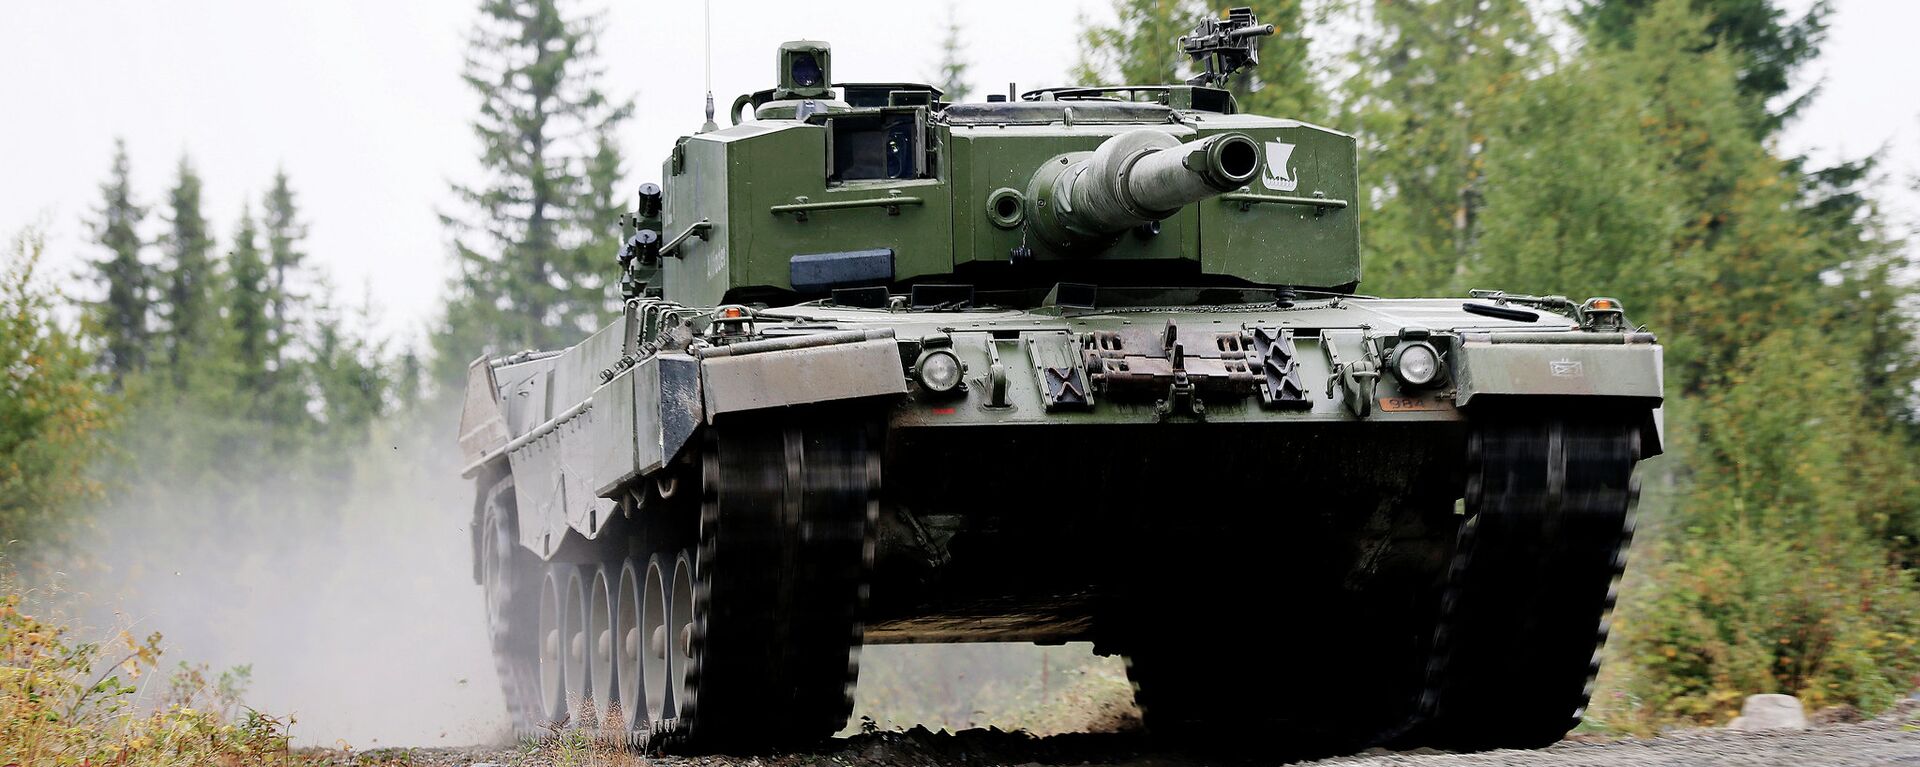 Tanque Leopard 2 A4 - Sputnik Mundo, 1920, 25.12.2022